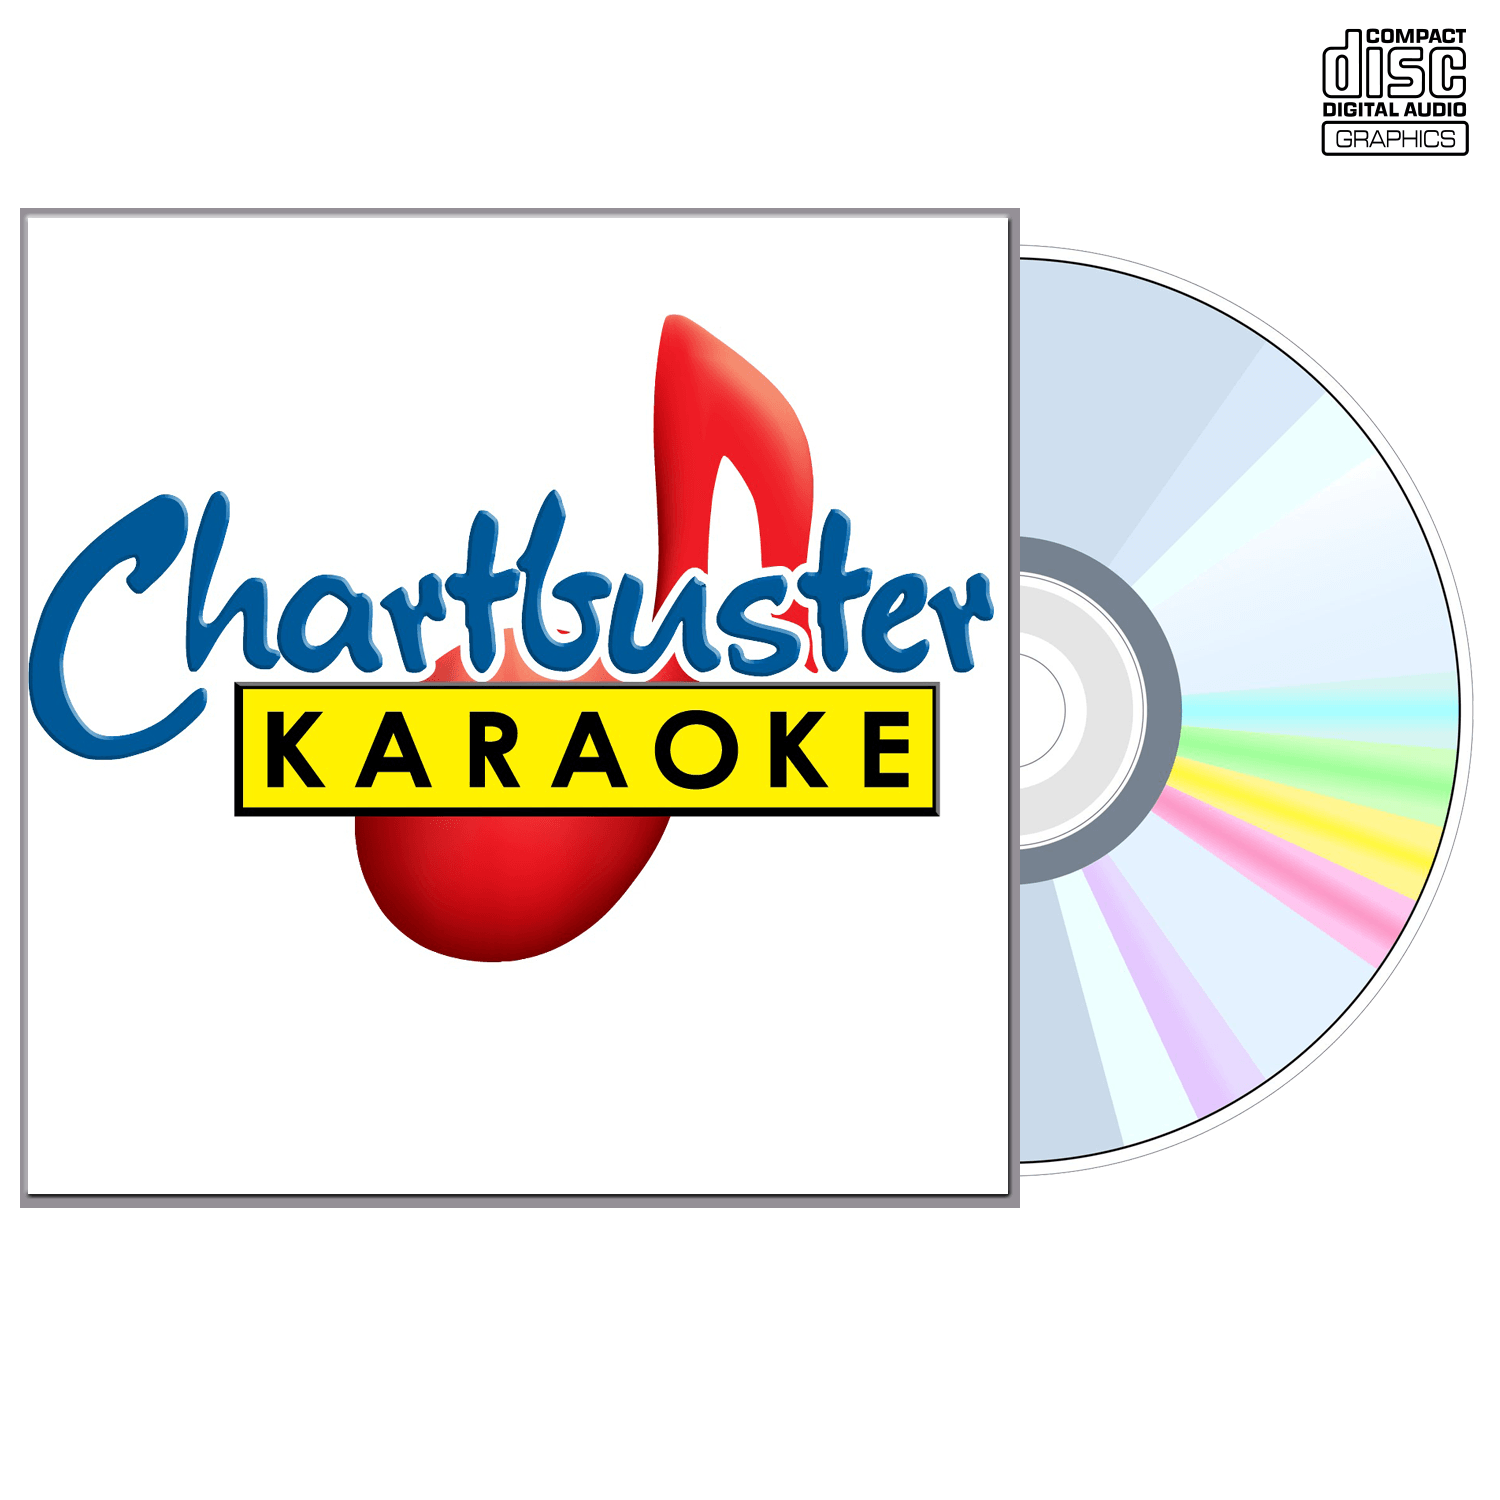 South Sixty Five - CD+G - Chartbuster Karaoke - Karaoke Home Entertainment